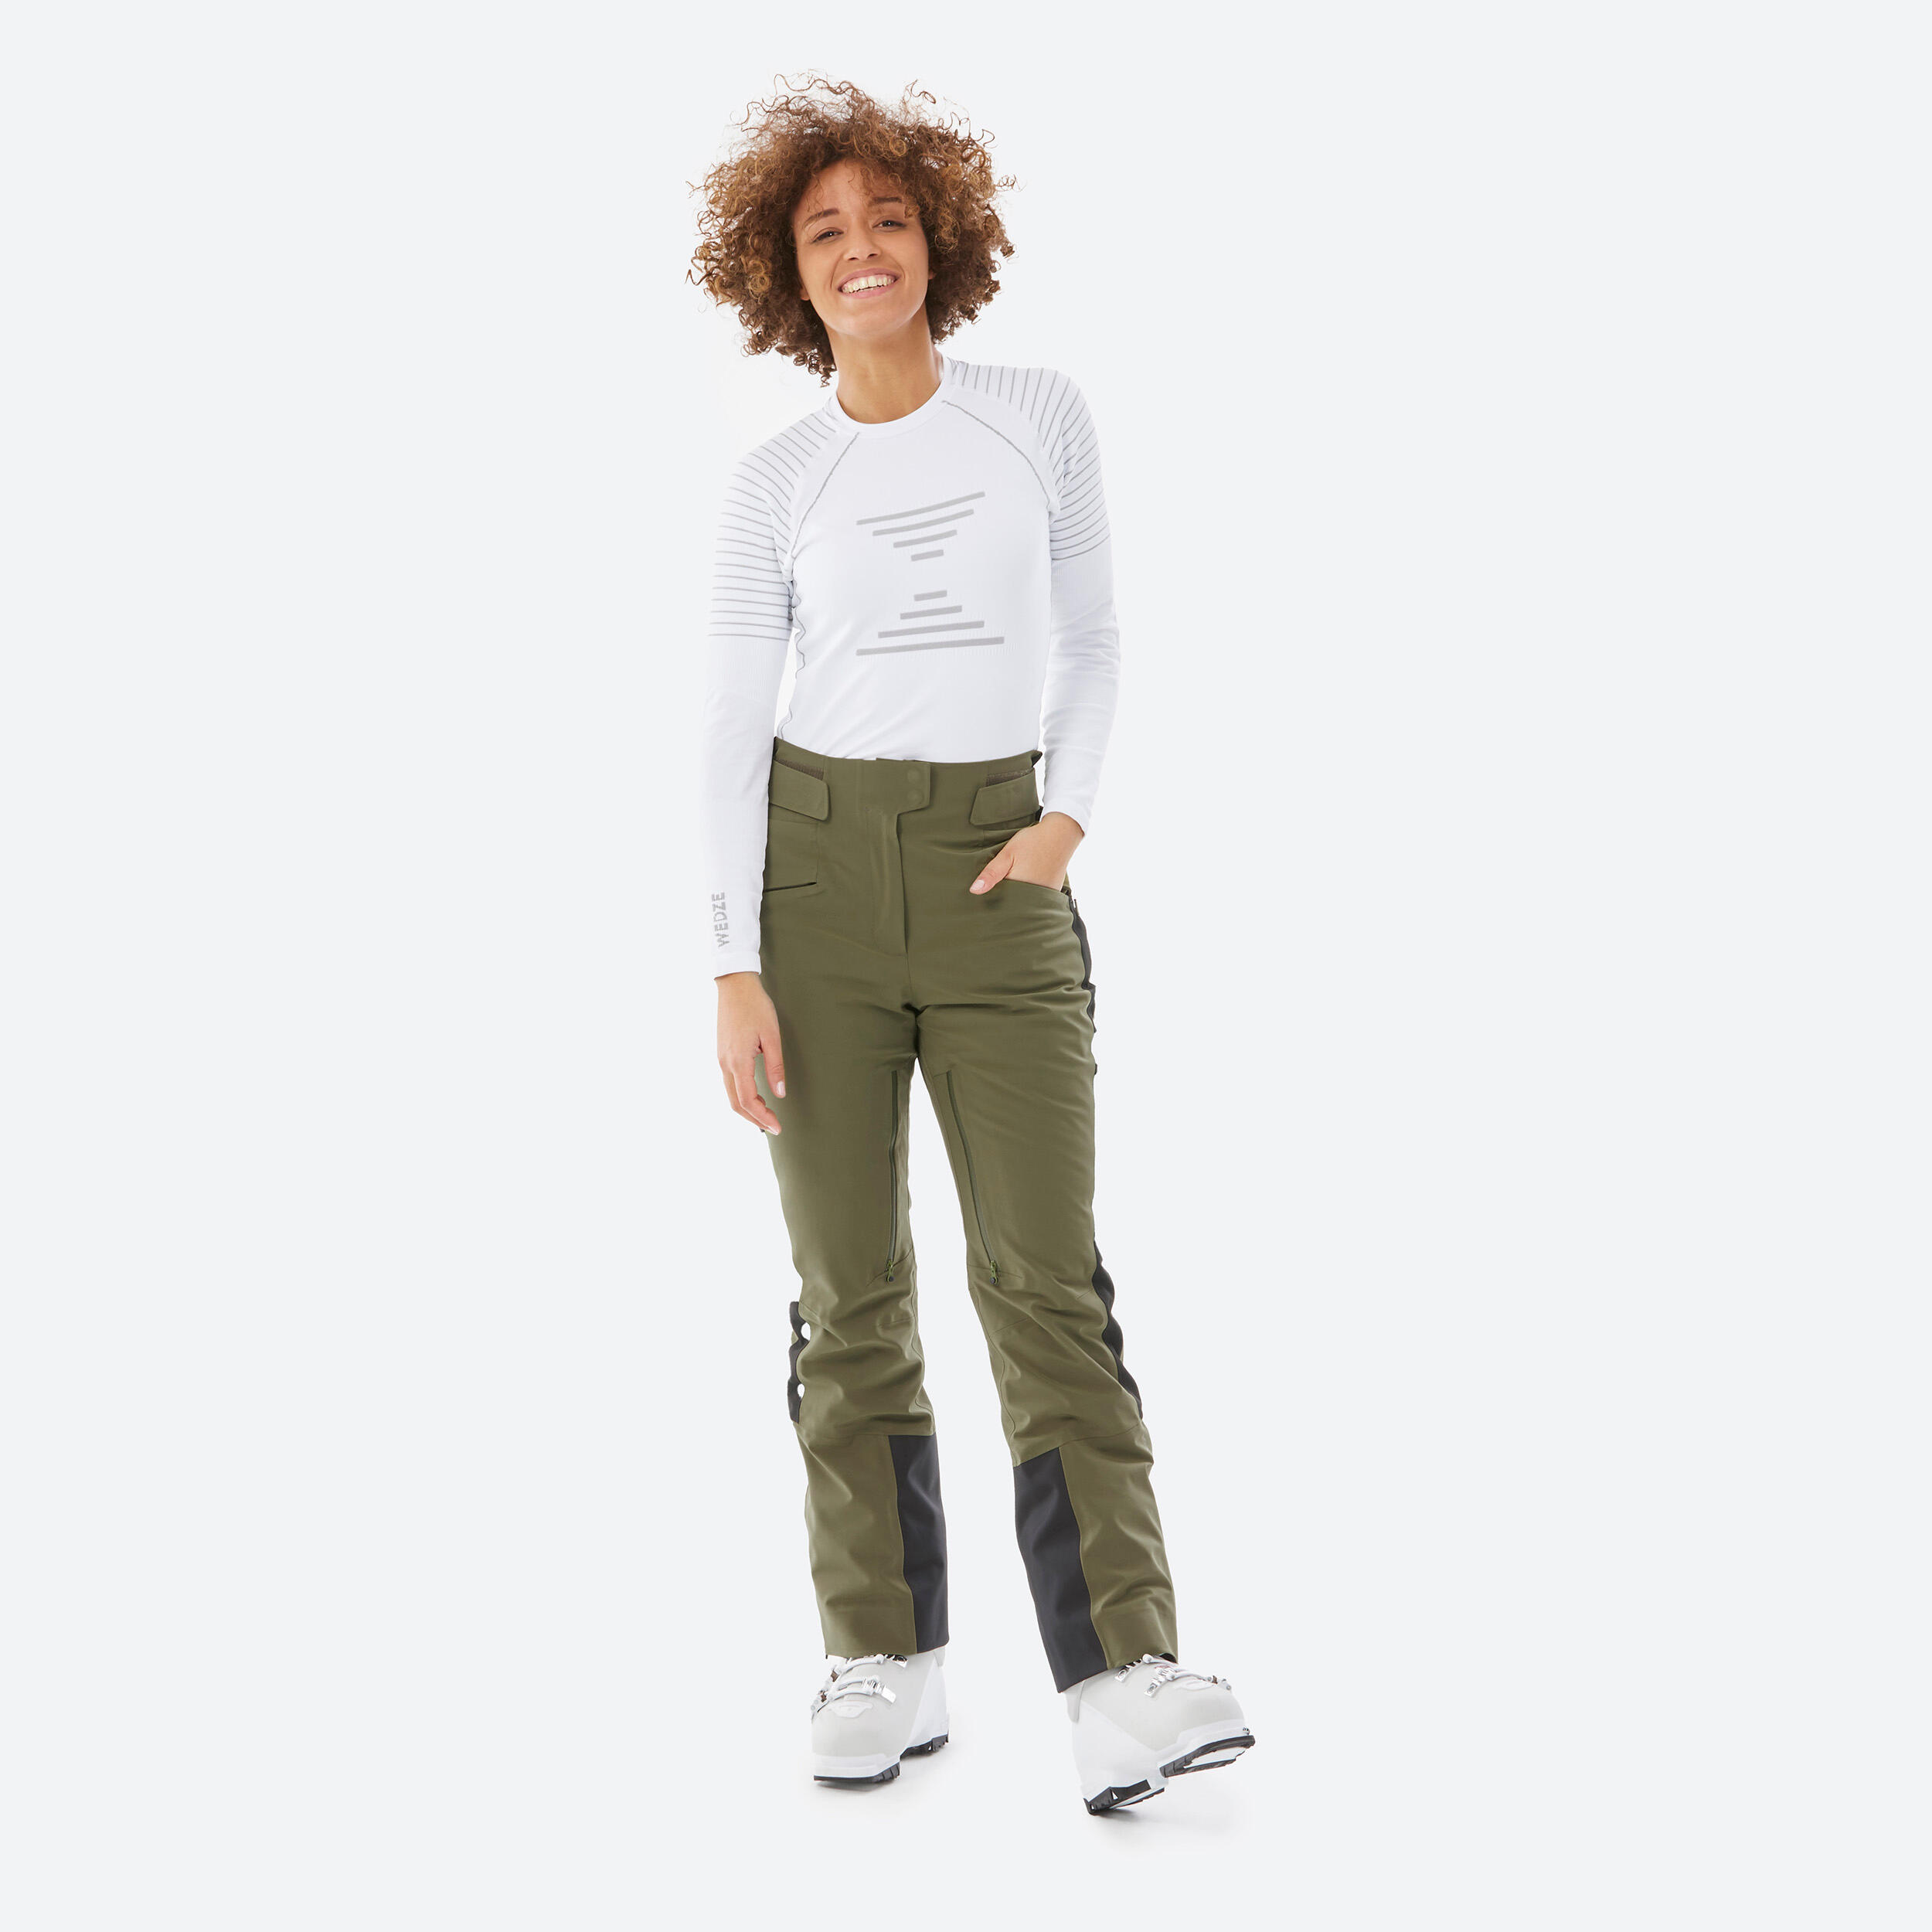 Women’s Ski Trousers 900 - Khaki 6/15